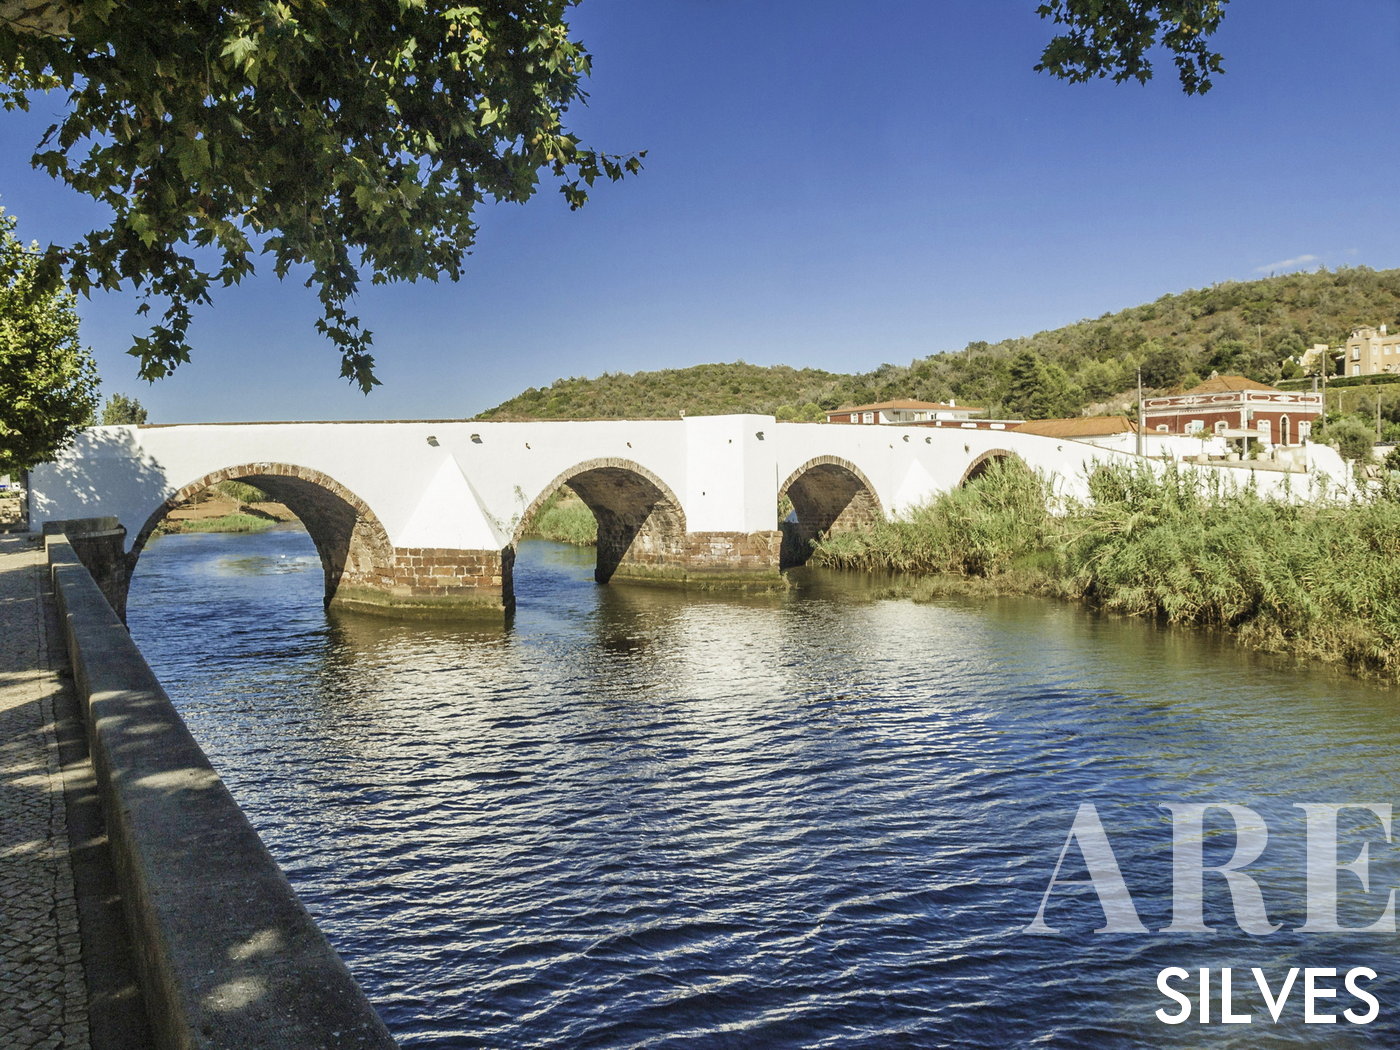 The Historic Bridge of Silves Over the Arade River